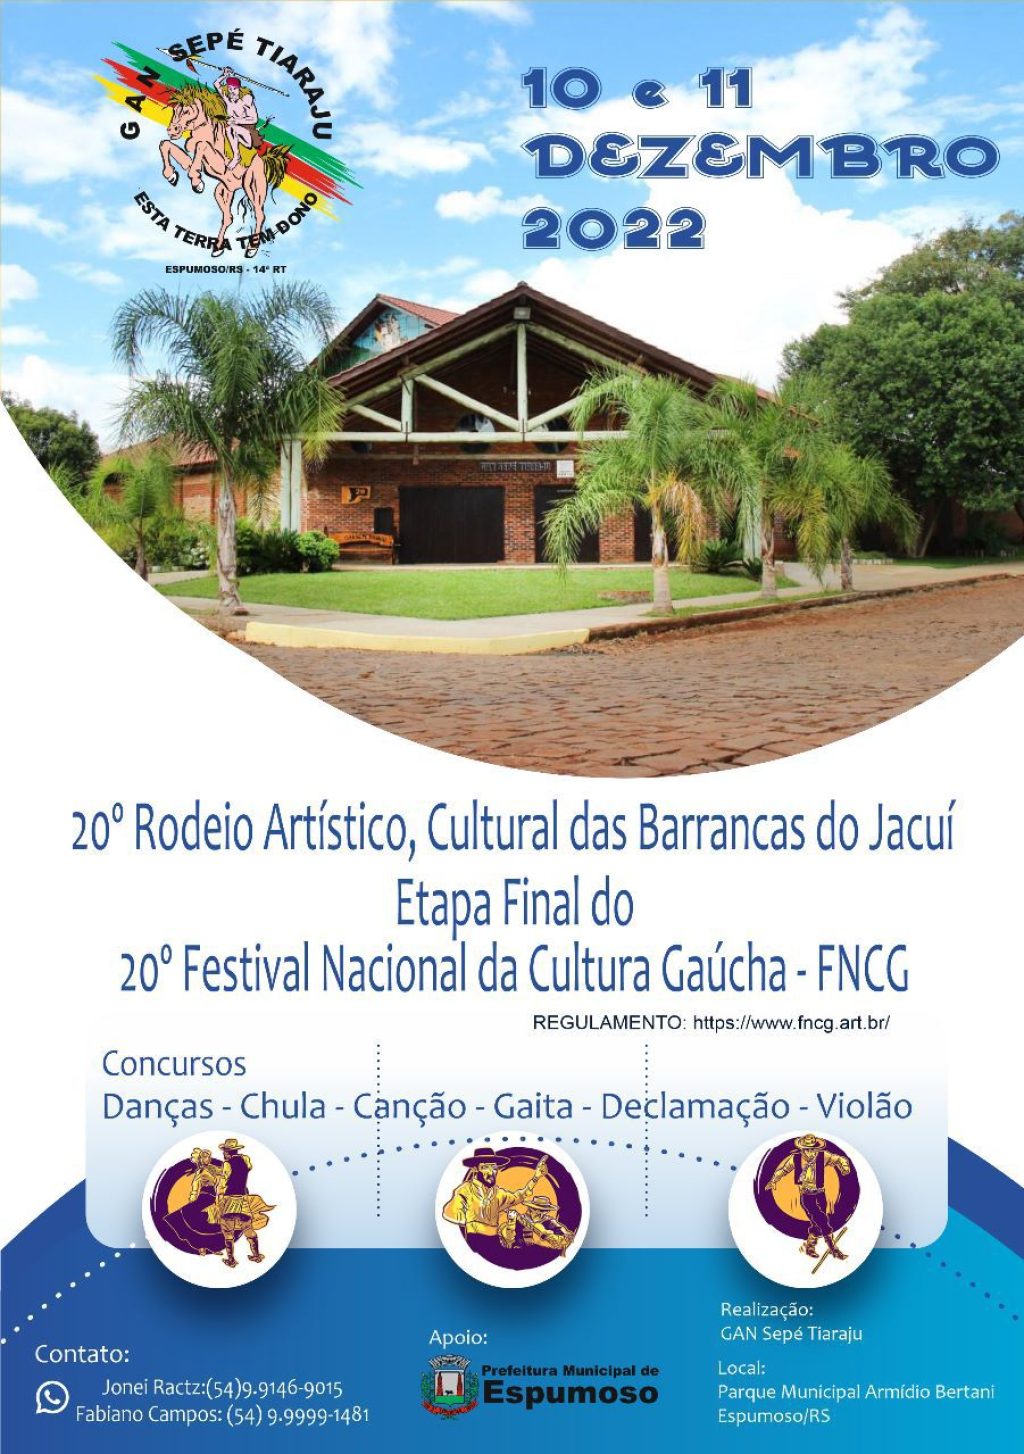 Vem aí o 20º Rodeio Artístico e Cultural das Barrancas do Jacuí